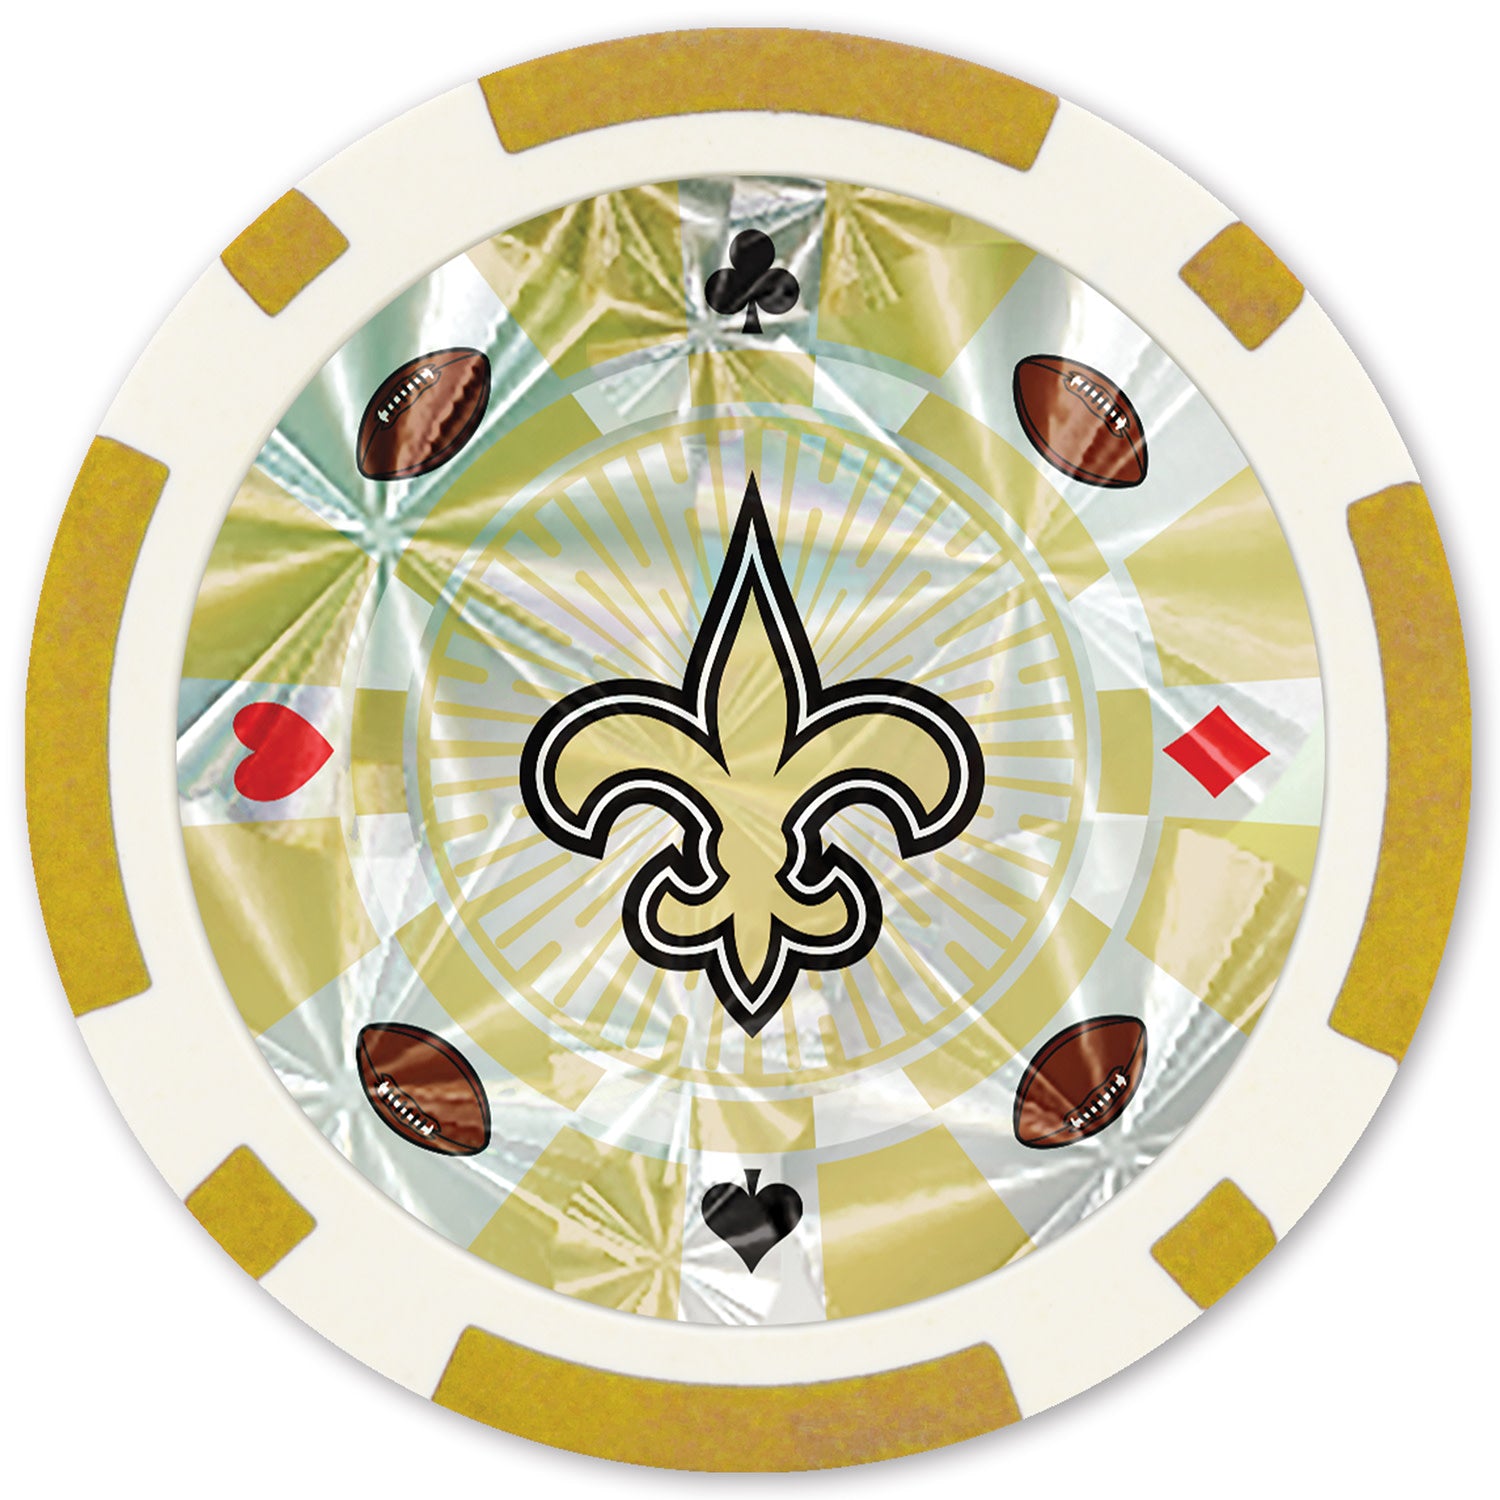 New Orleans Saints NFL Poker Chips 20pc